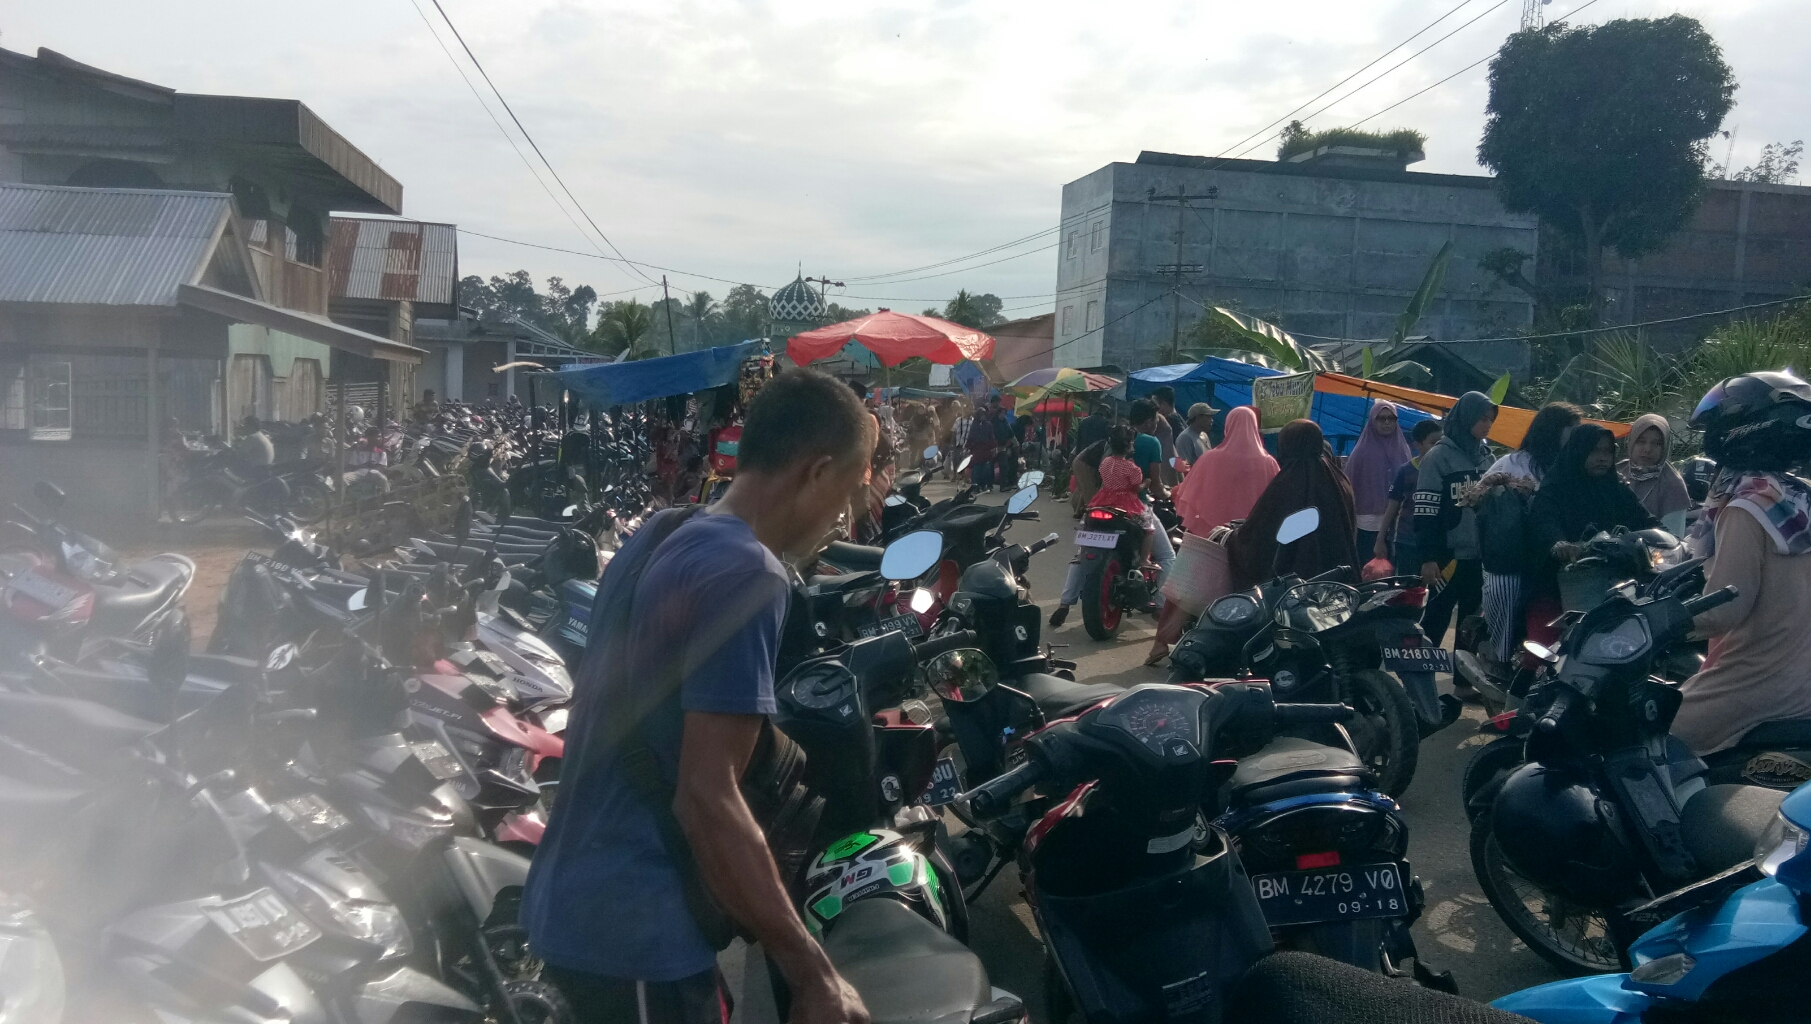 Jelang 1 Hari Puasa Pasar Pekan Heran Inhu, Ramai Dikunjungi Pembeli